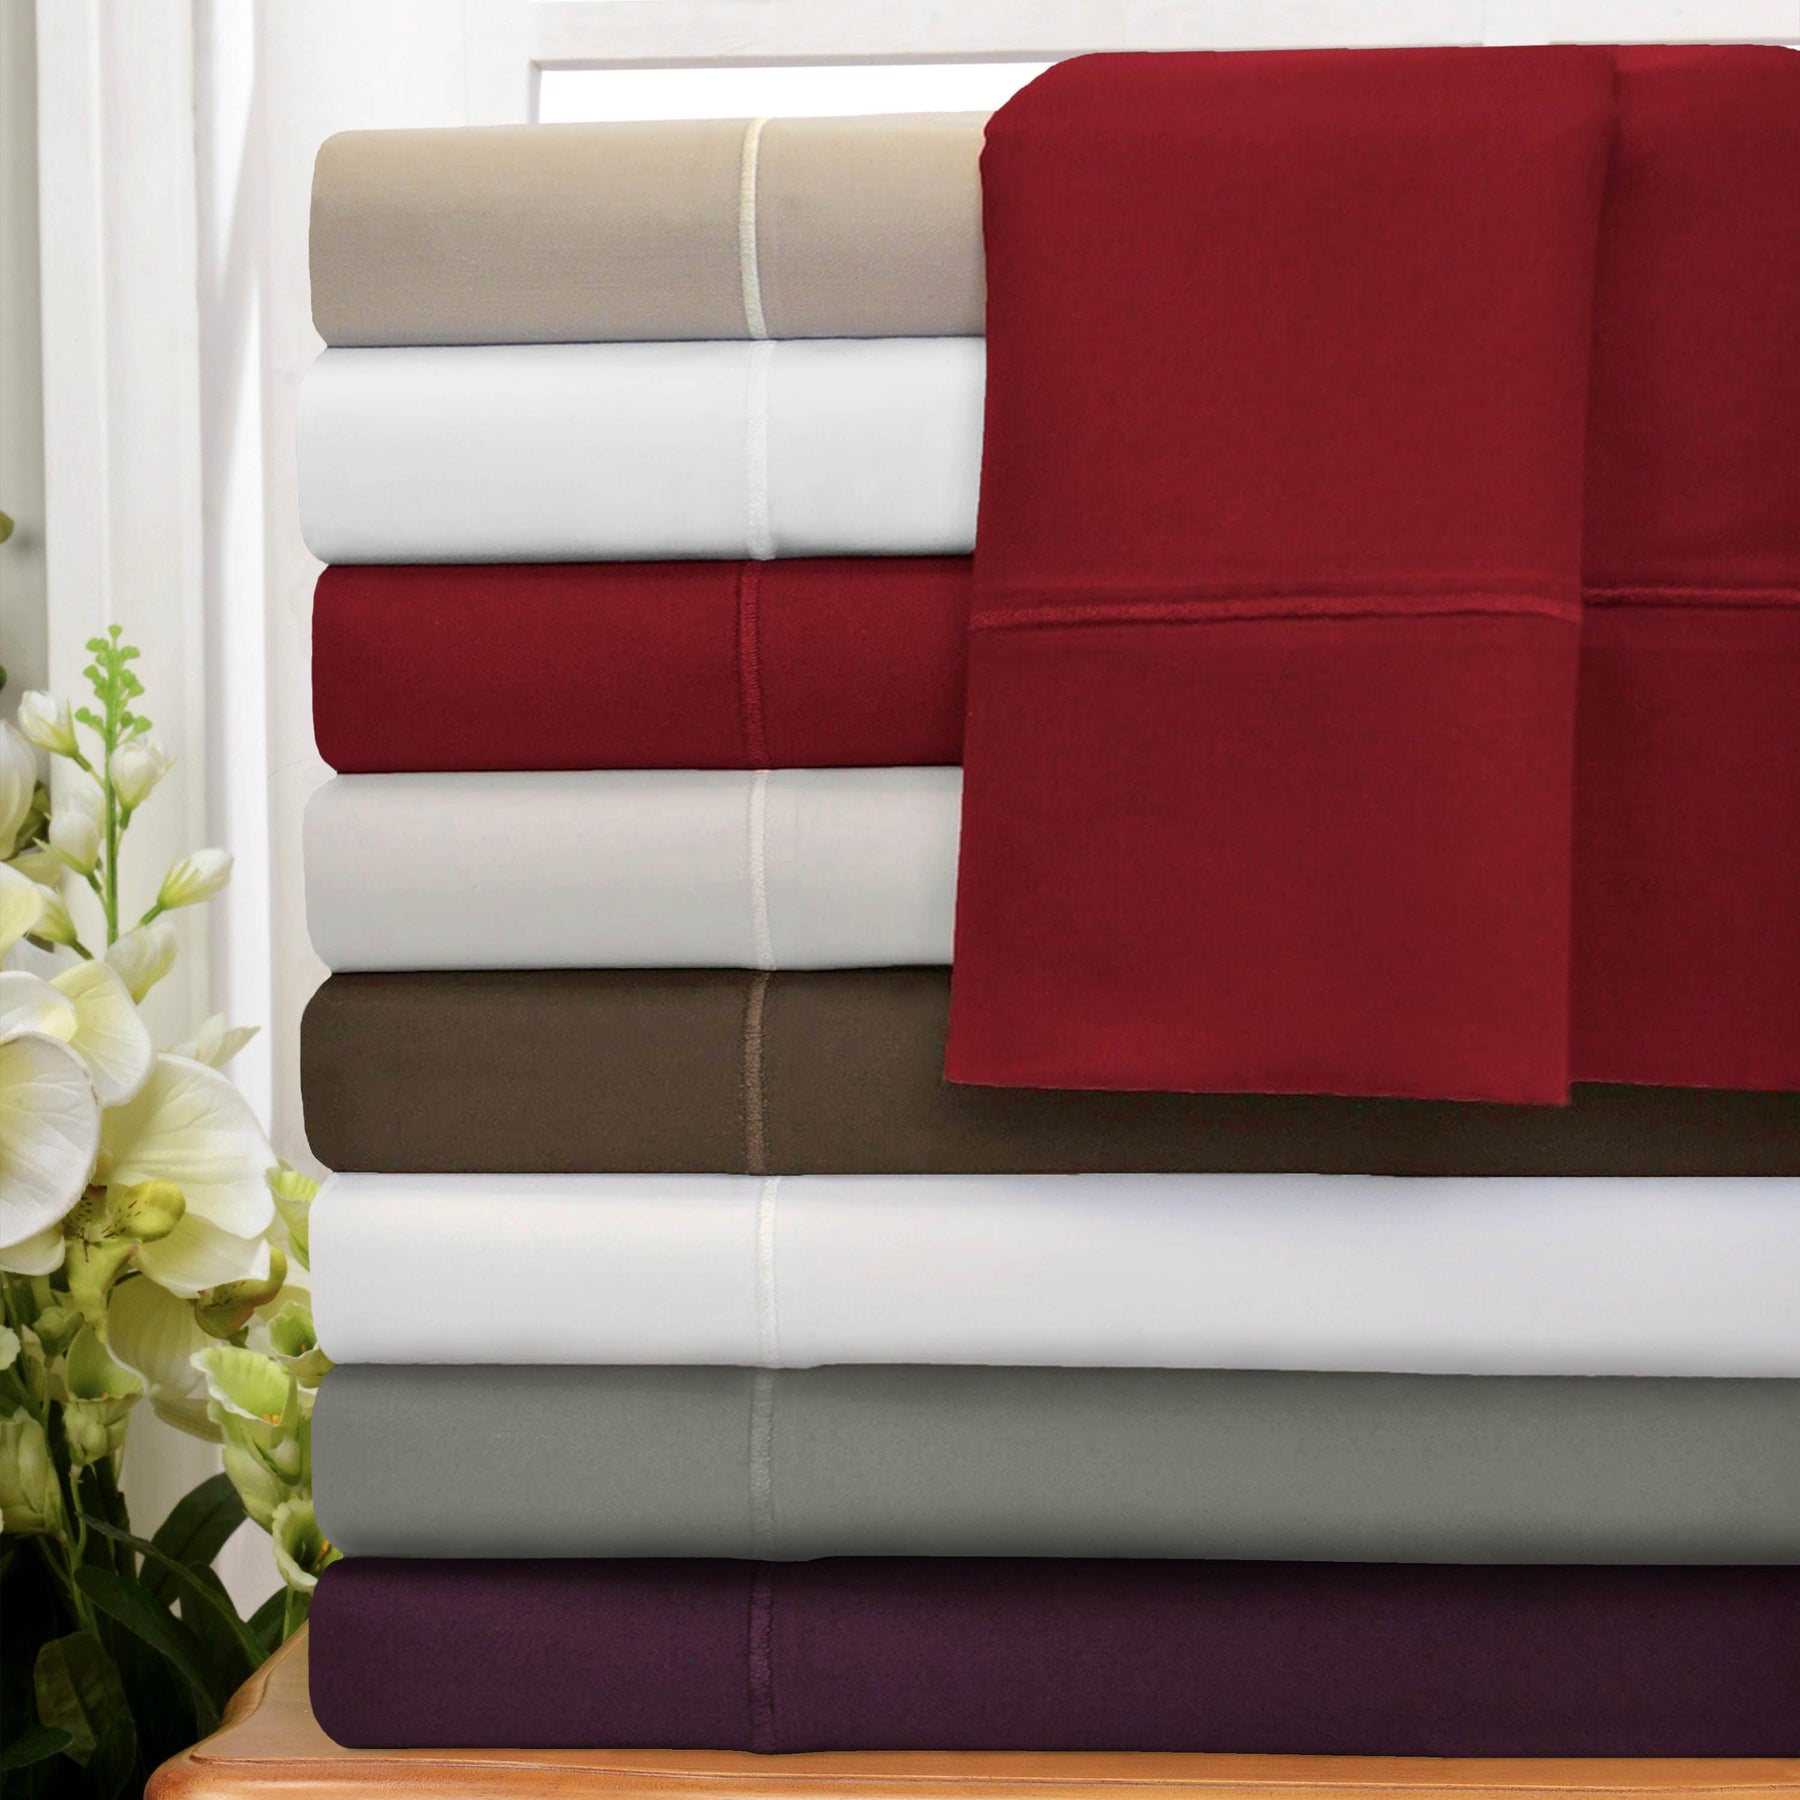 Superior Solid 1500-Thread Count Ultra-Soft Cotton Marrow Stitch Sheet Set - Burgundy